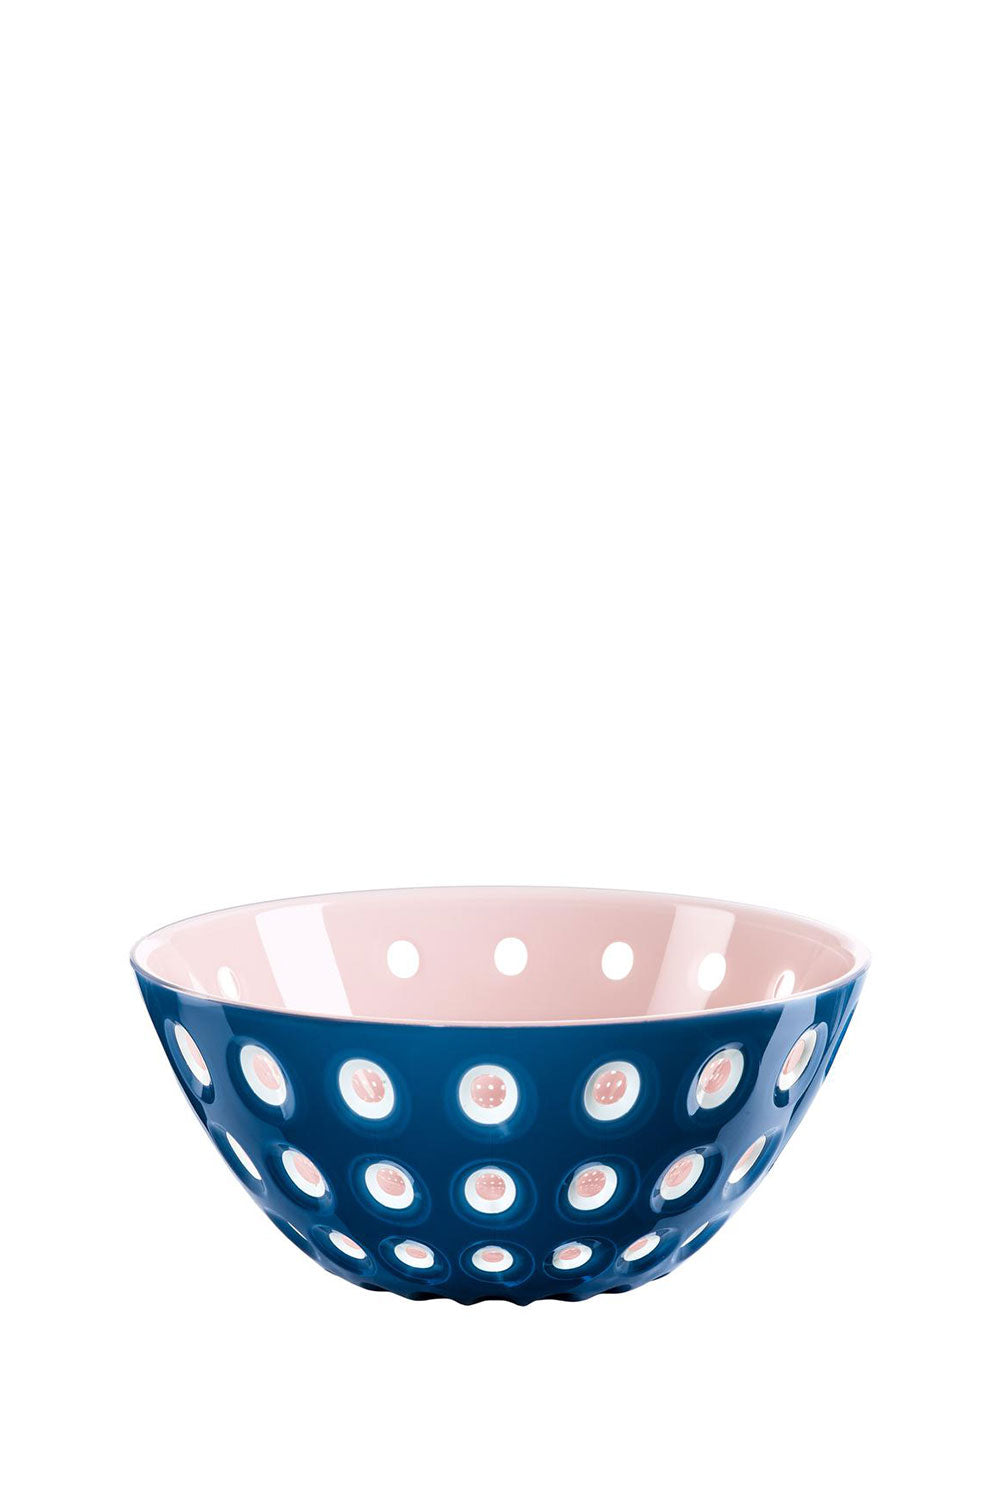 Murrine Pink & Blue Bowl, 20 cm - Maison7